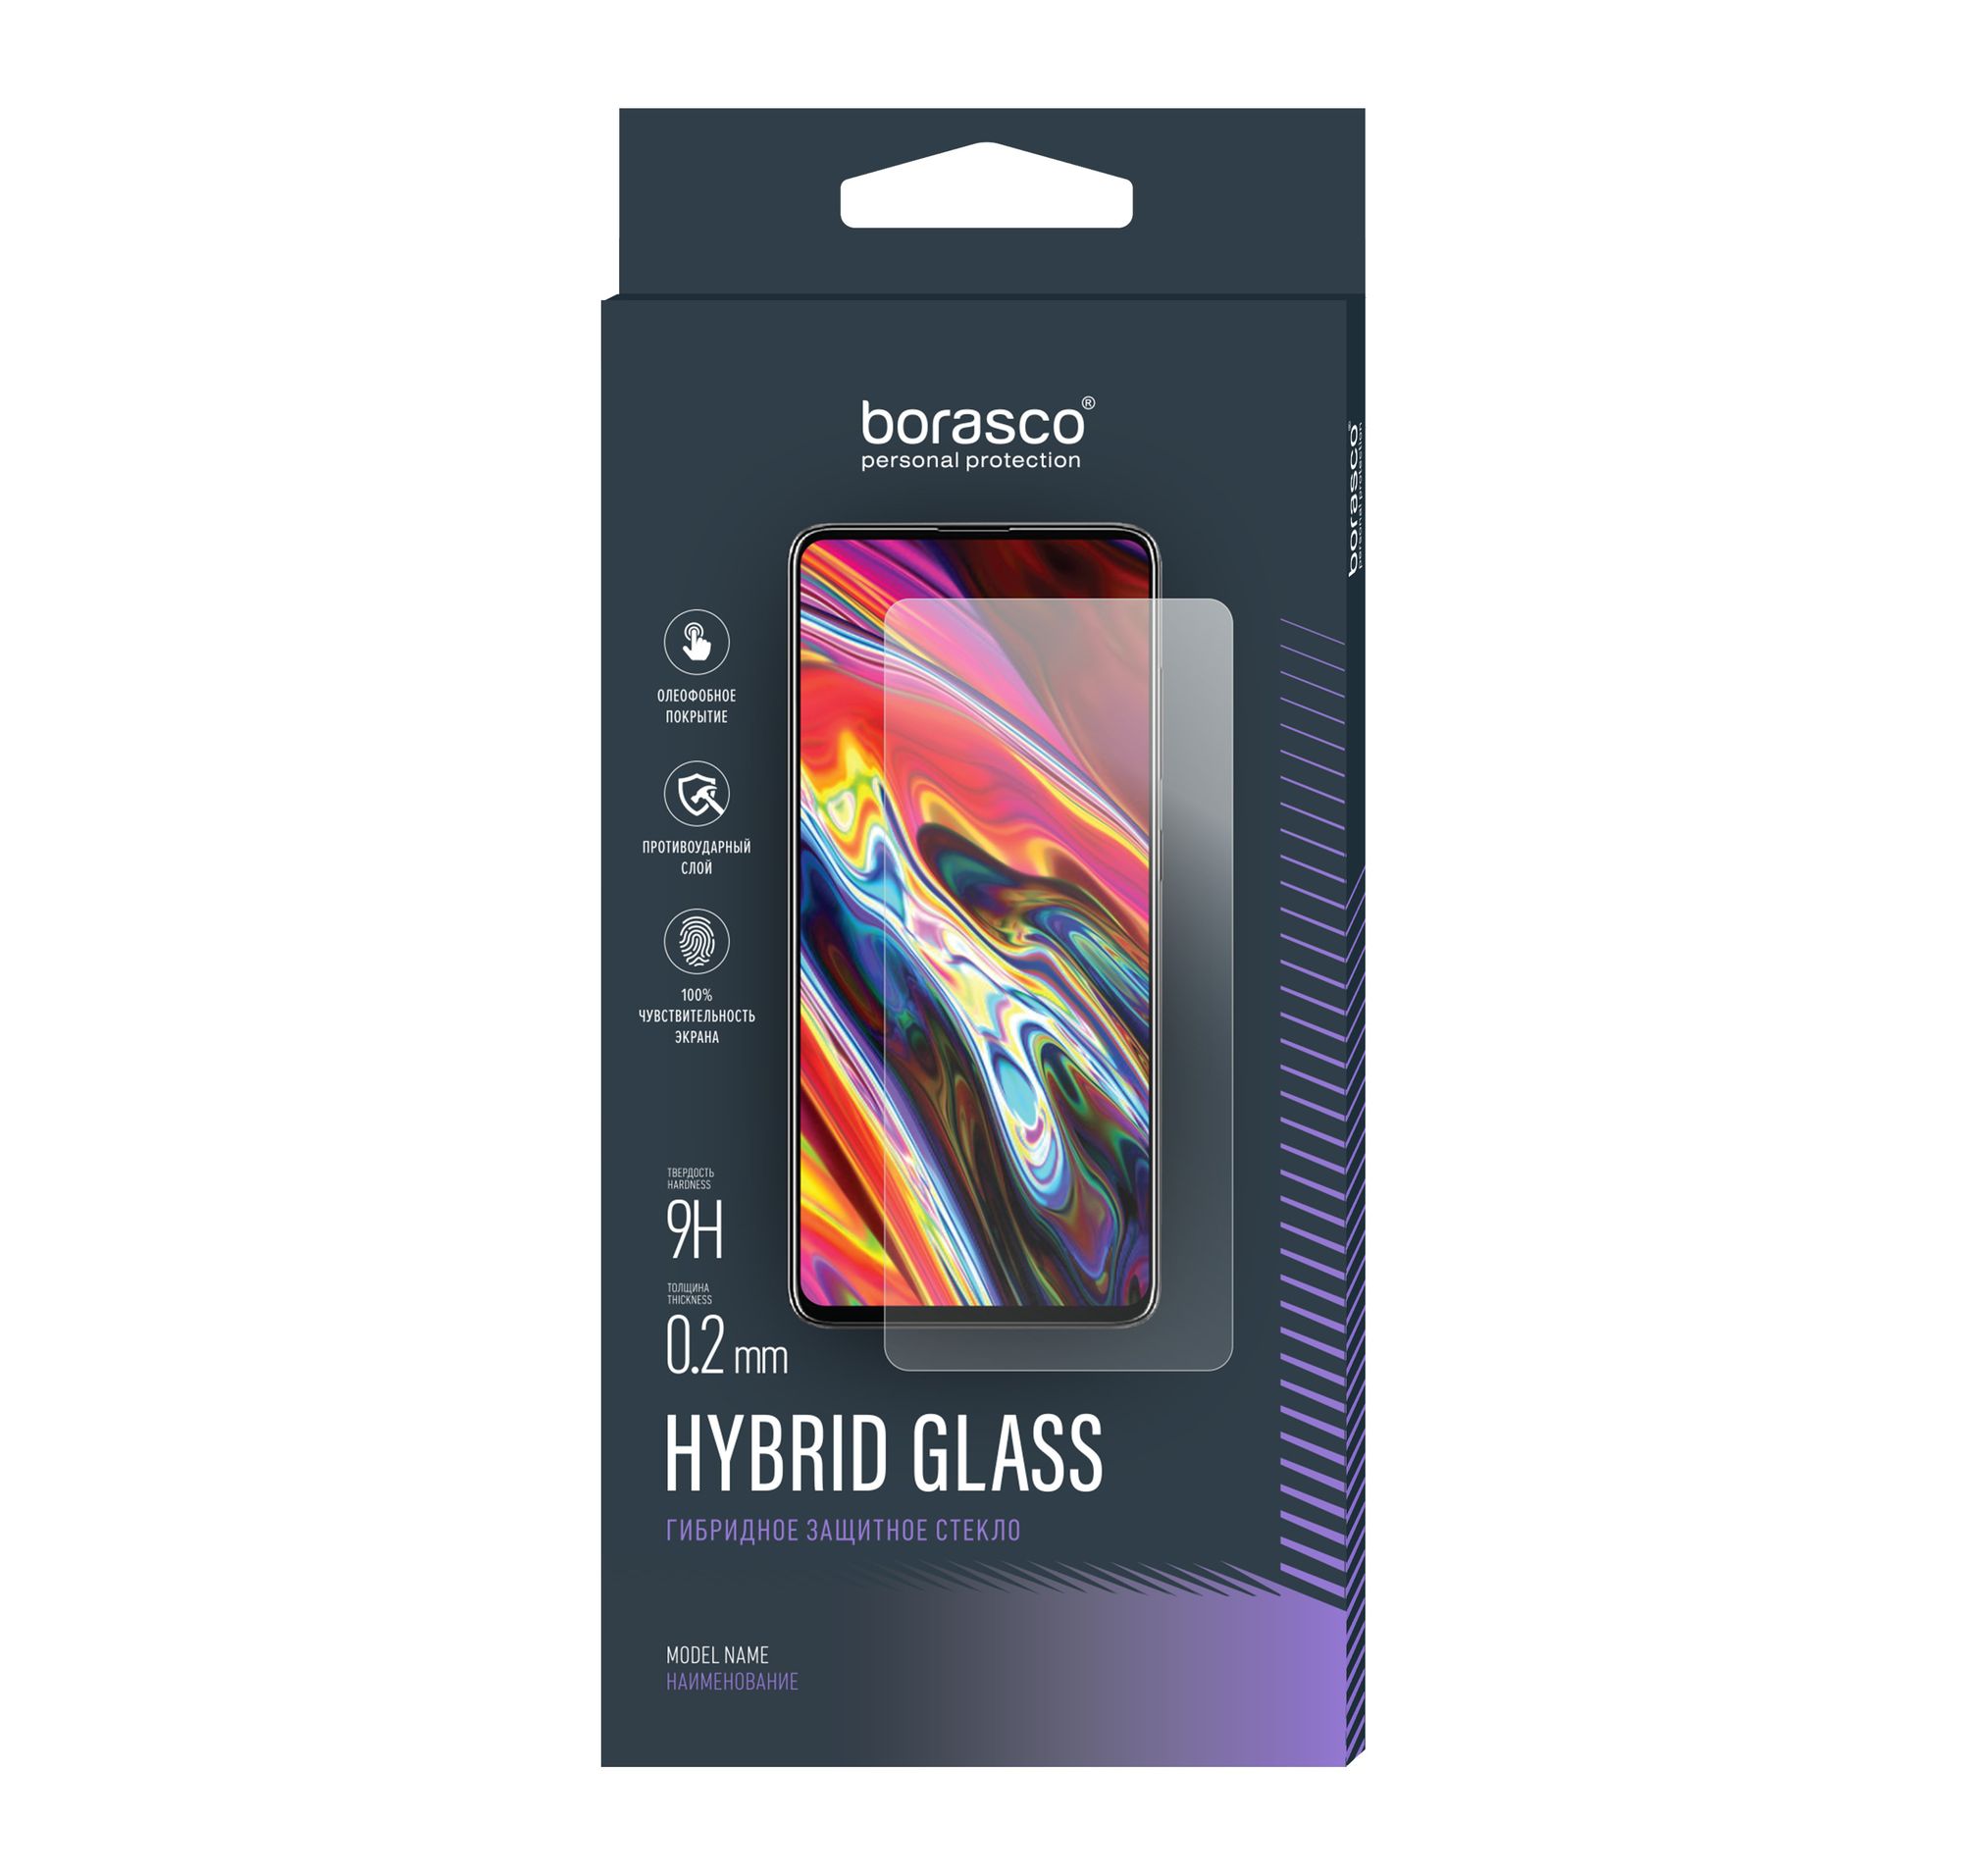 Стекло защитное Hybrid Glass VSP 0,26 мм для Huawei Y9 2018 стекло задней камеры для huawei y9 2018 fla lx1 без рамки